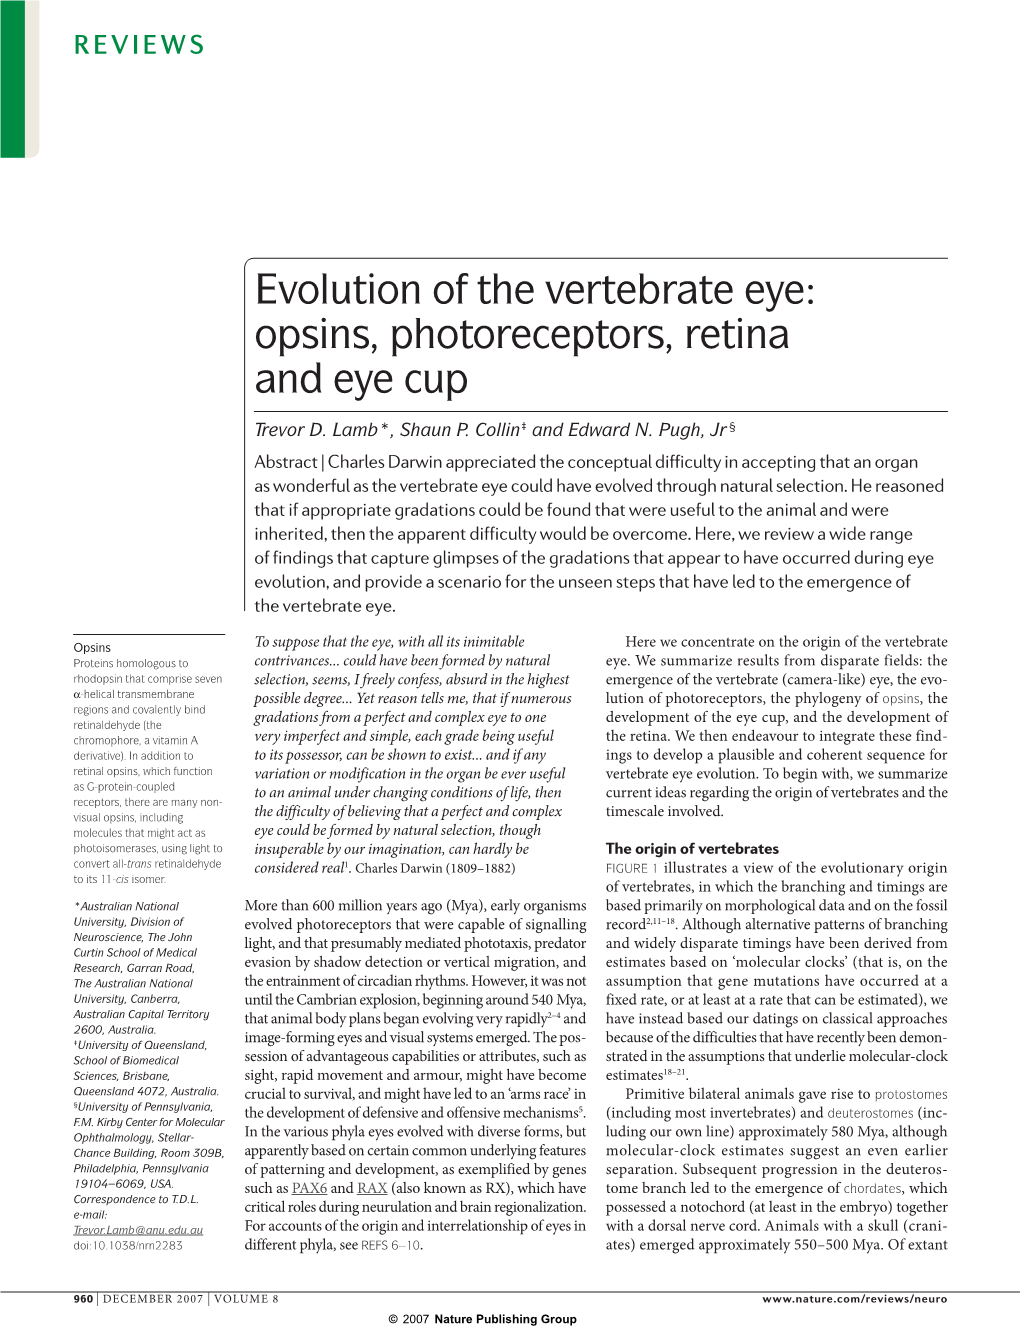 Evolution of the Vertebrate Eye: Opsins, Photoreceptors, Retina and Eye Cup